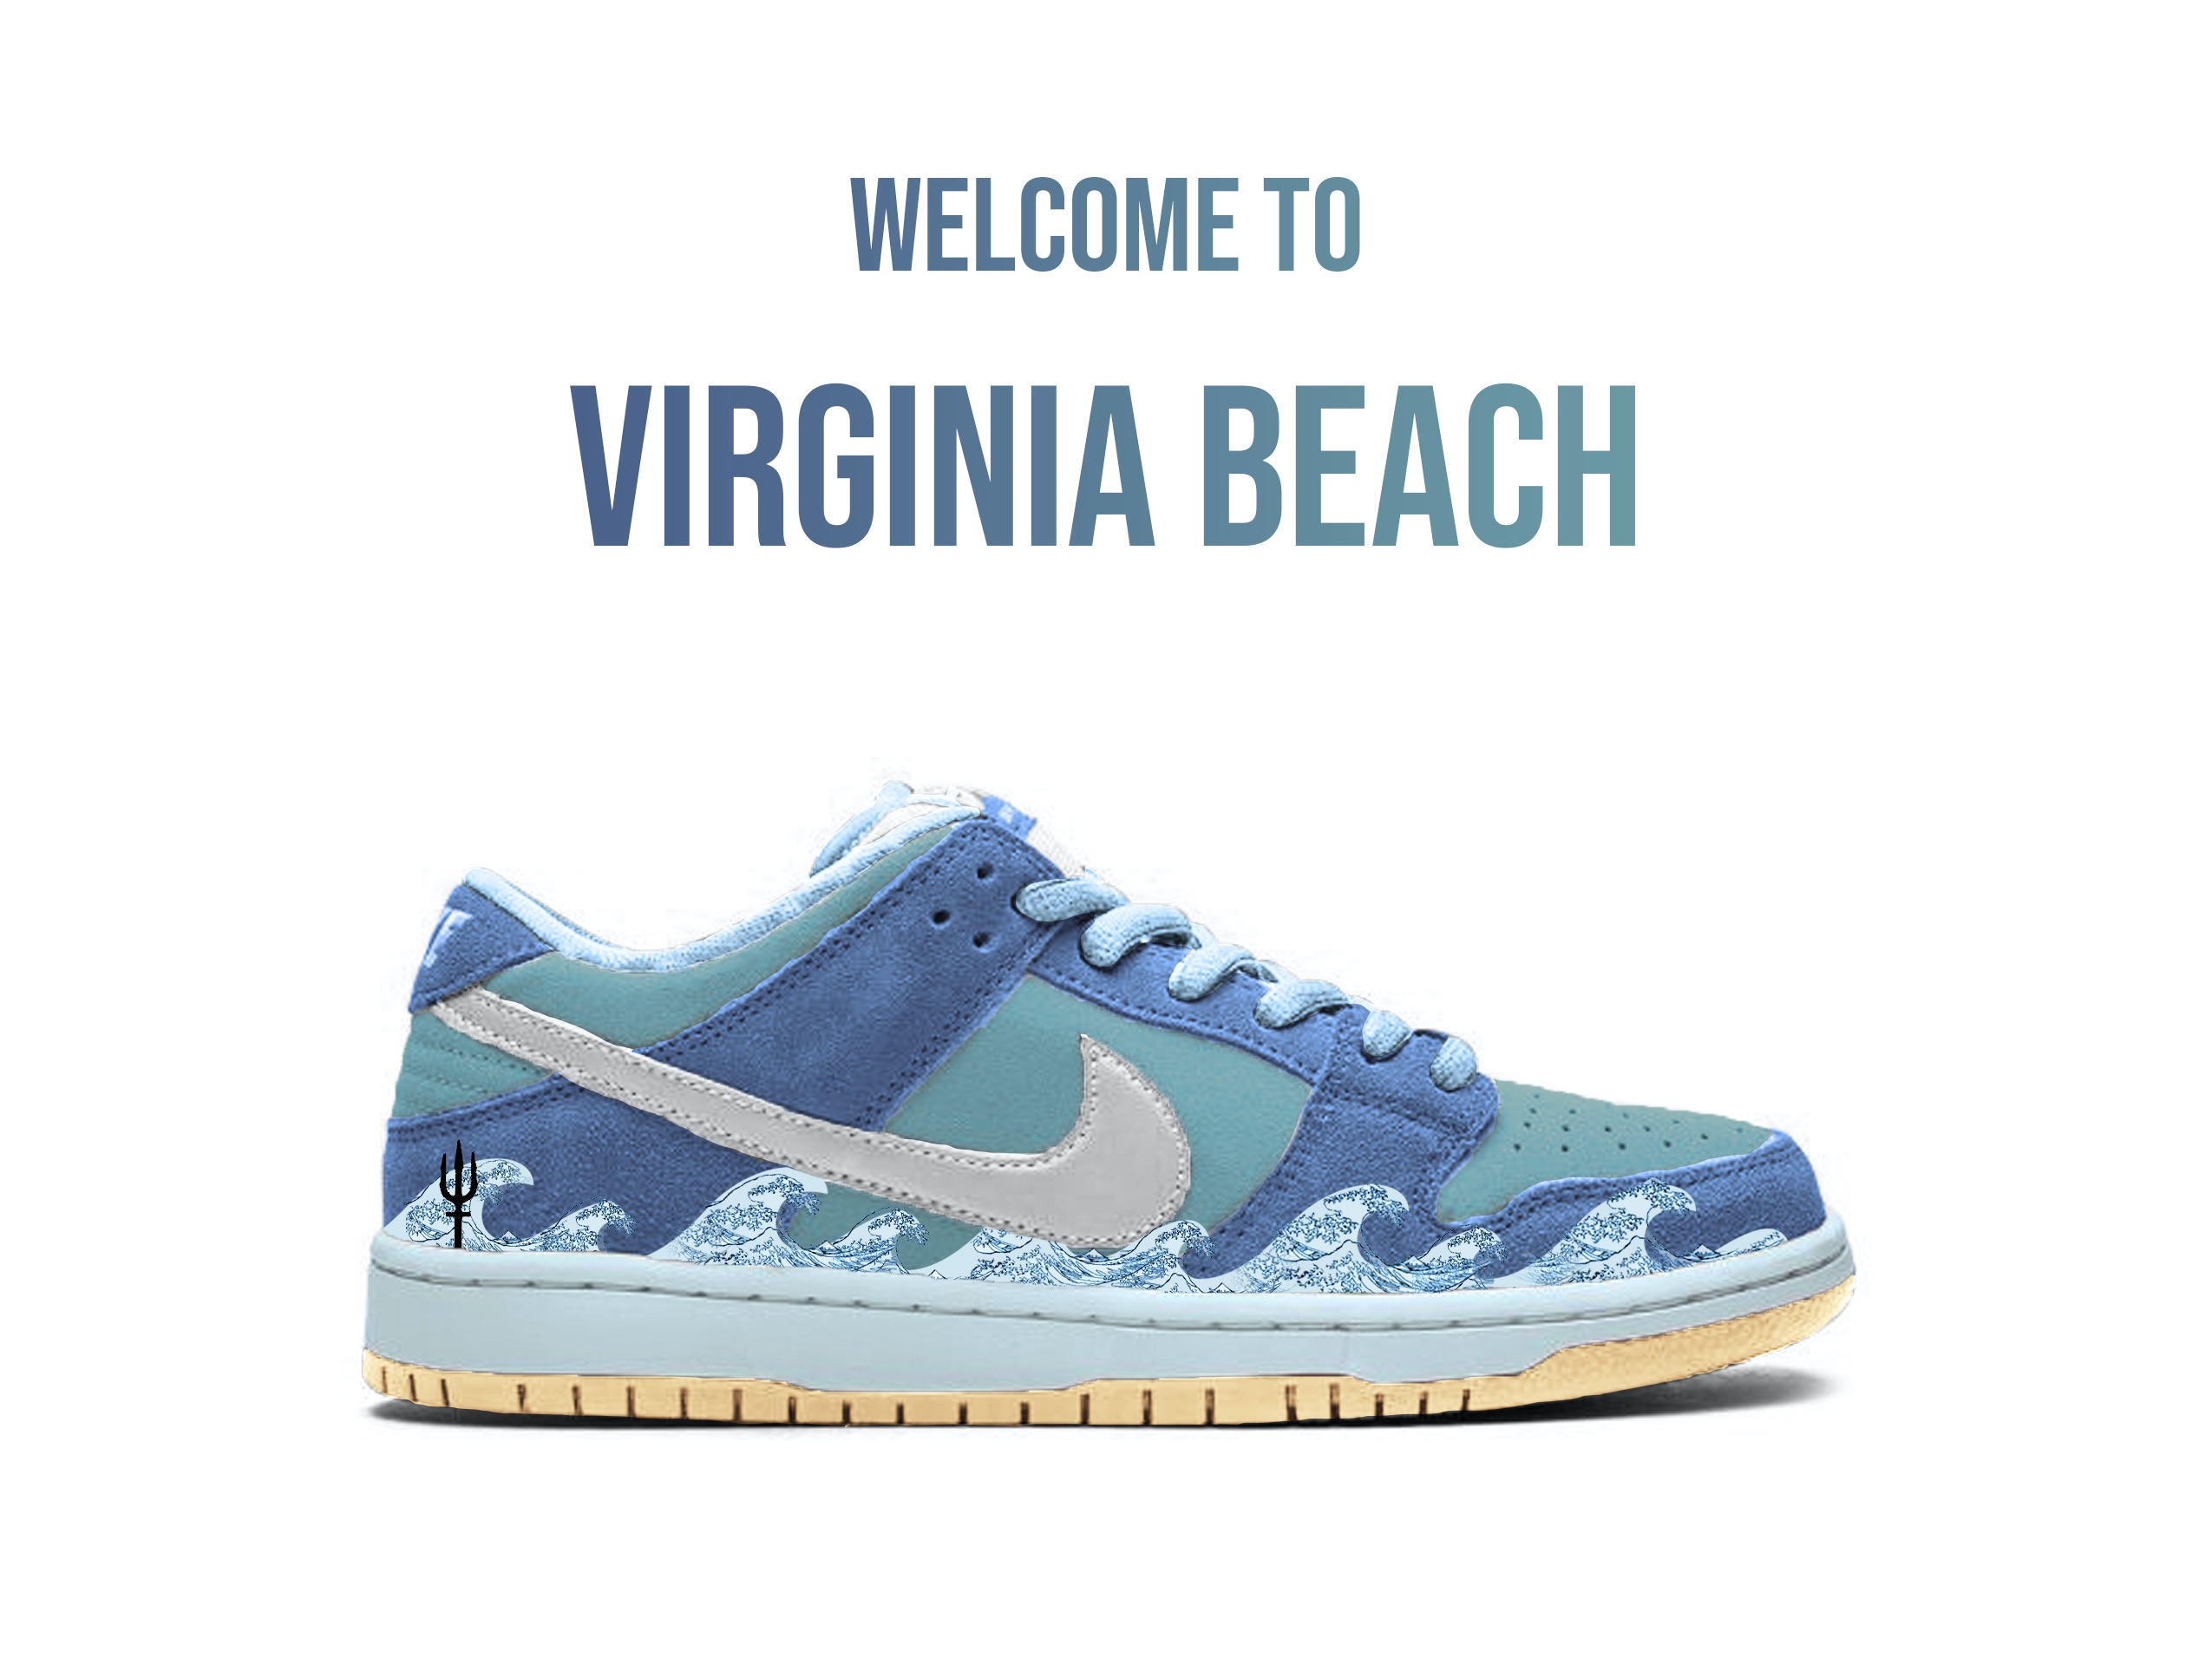 Virginia Beach-themed Nike shoe design viral for Guardsman The Virginian-Pilot